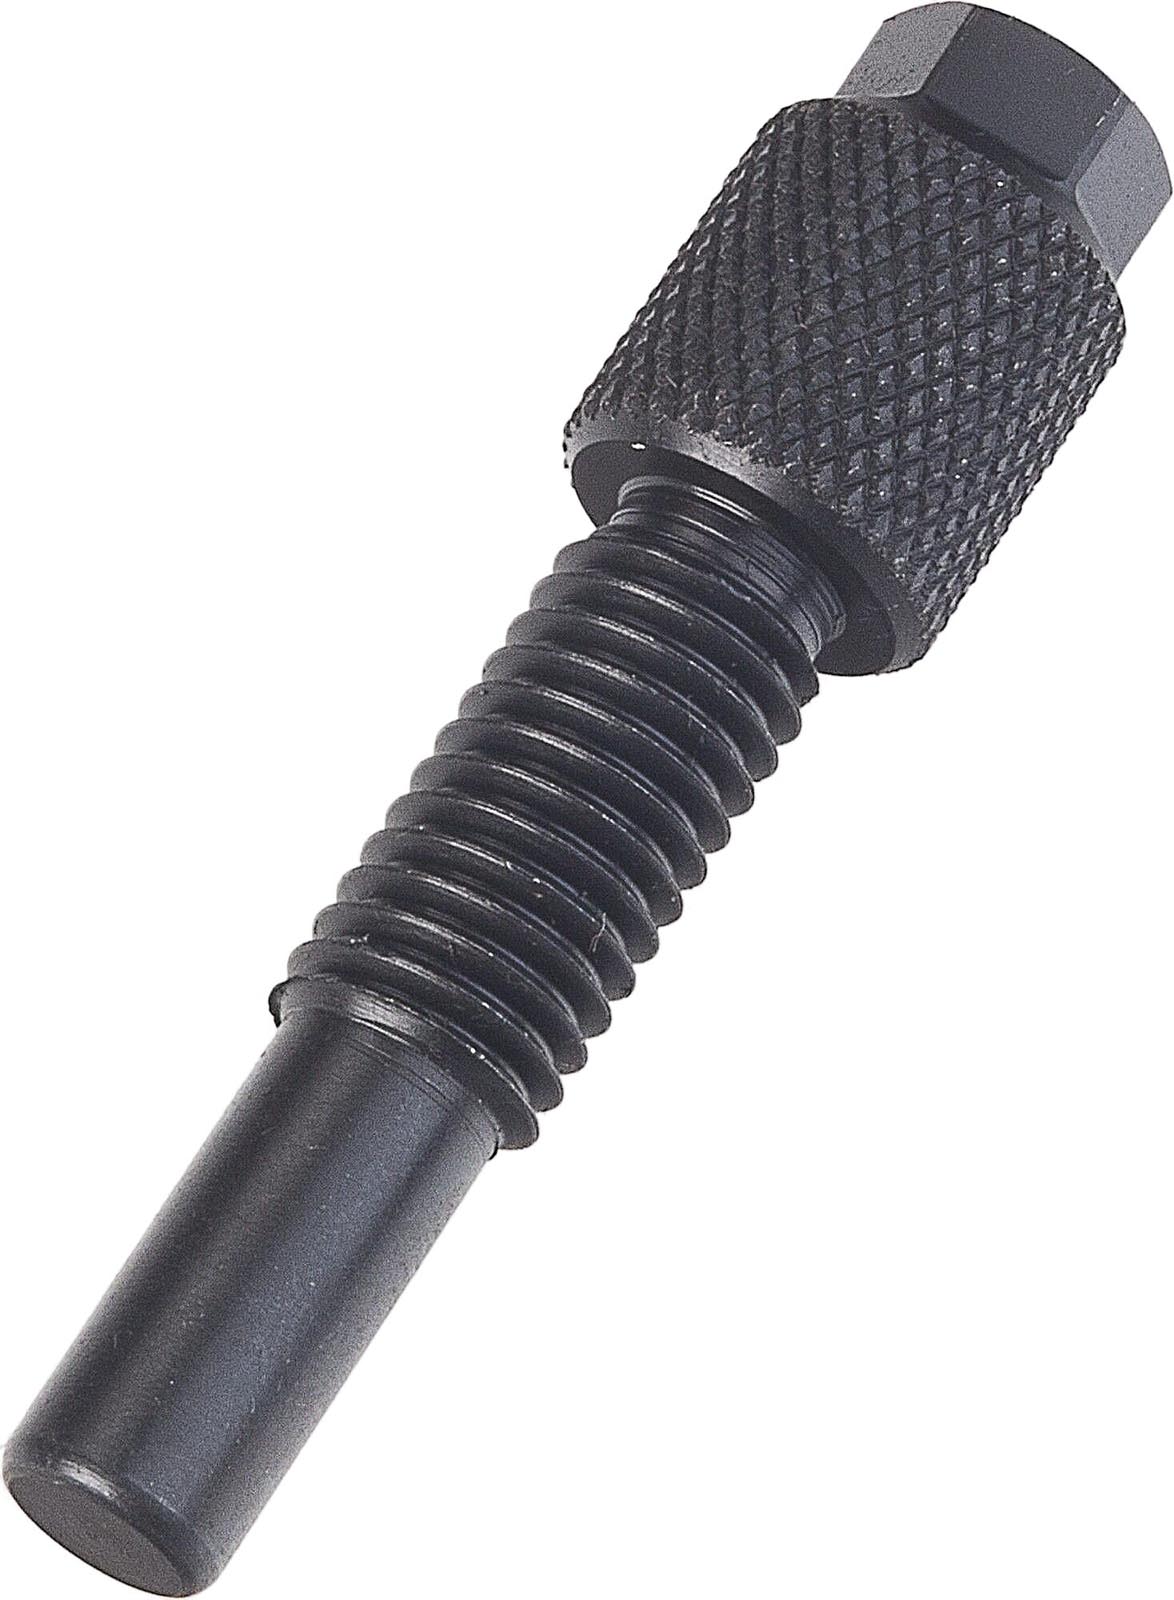 HAZET Retaining Pin, crankshaft Crankshaft locking tool